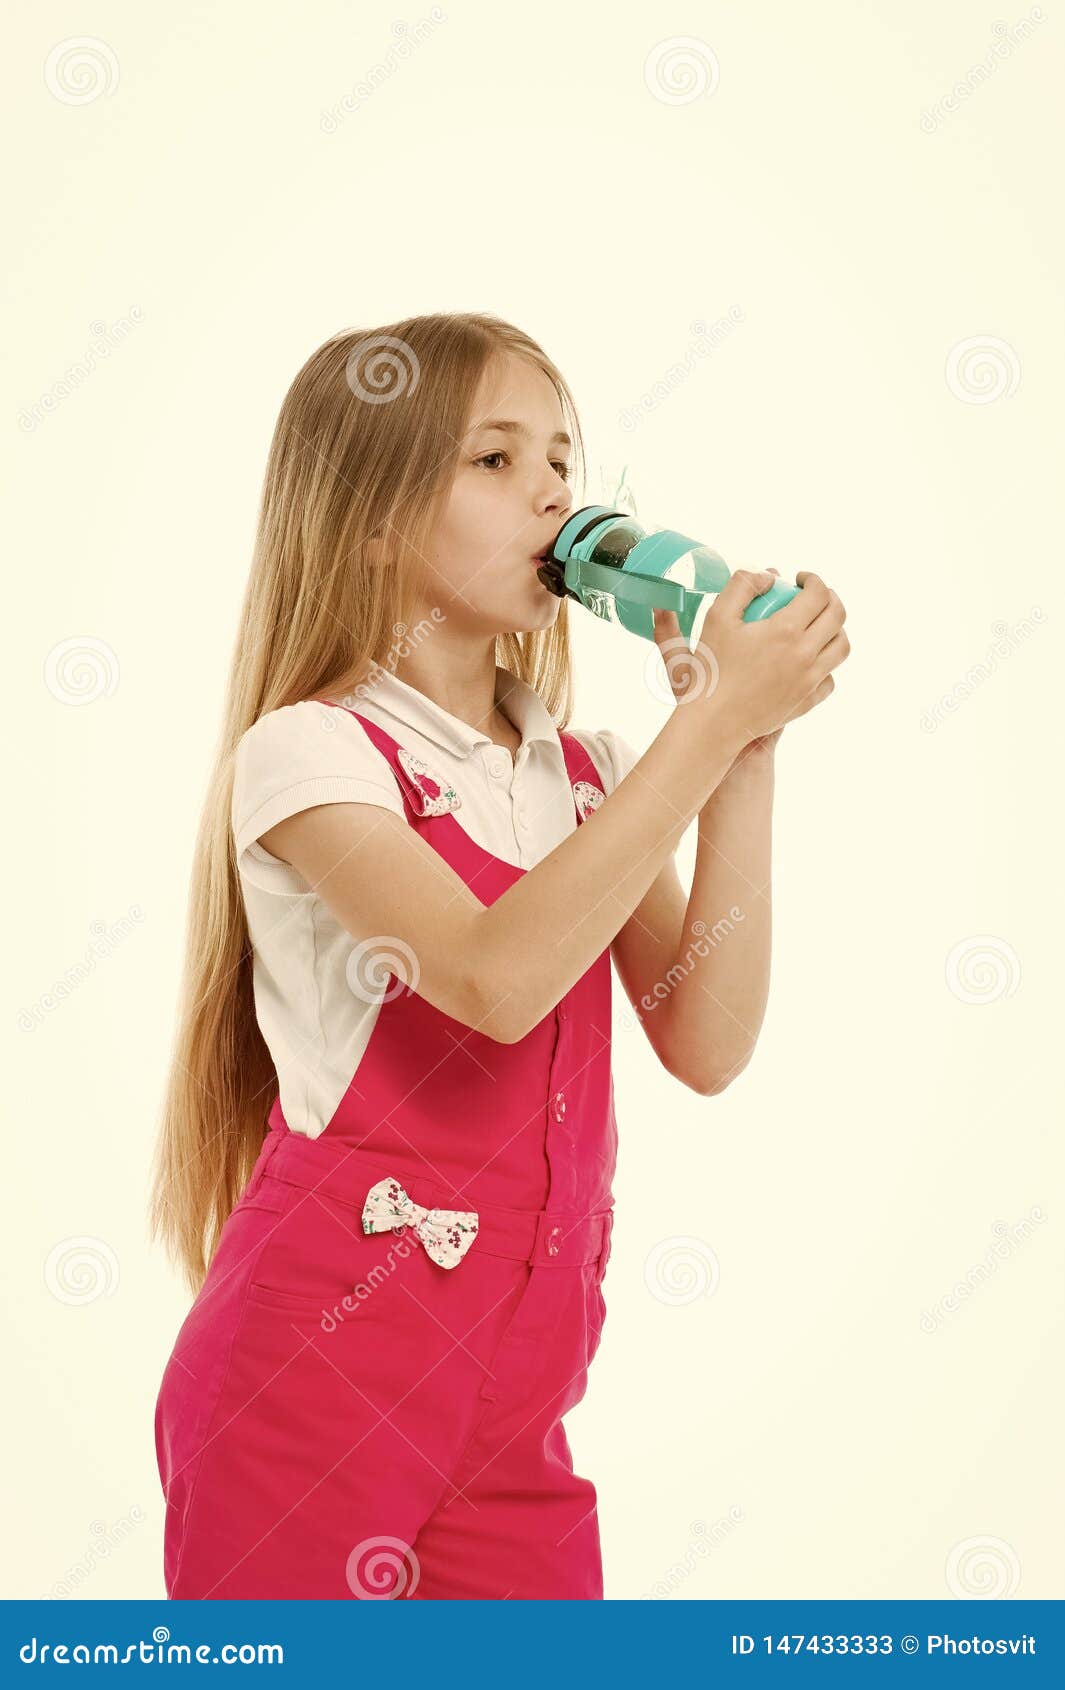 https://thumbs.dreamstime.com/z/clean-fresh-water-girl-water-bottle-drinking-isolated-white-background-kid-girl-long-hair-drinks-fresh-drink-147433333.jpg